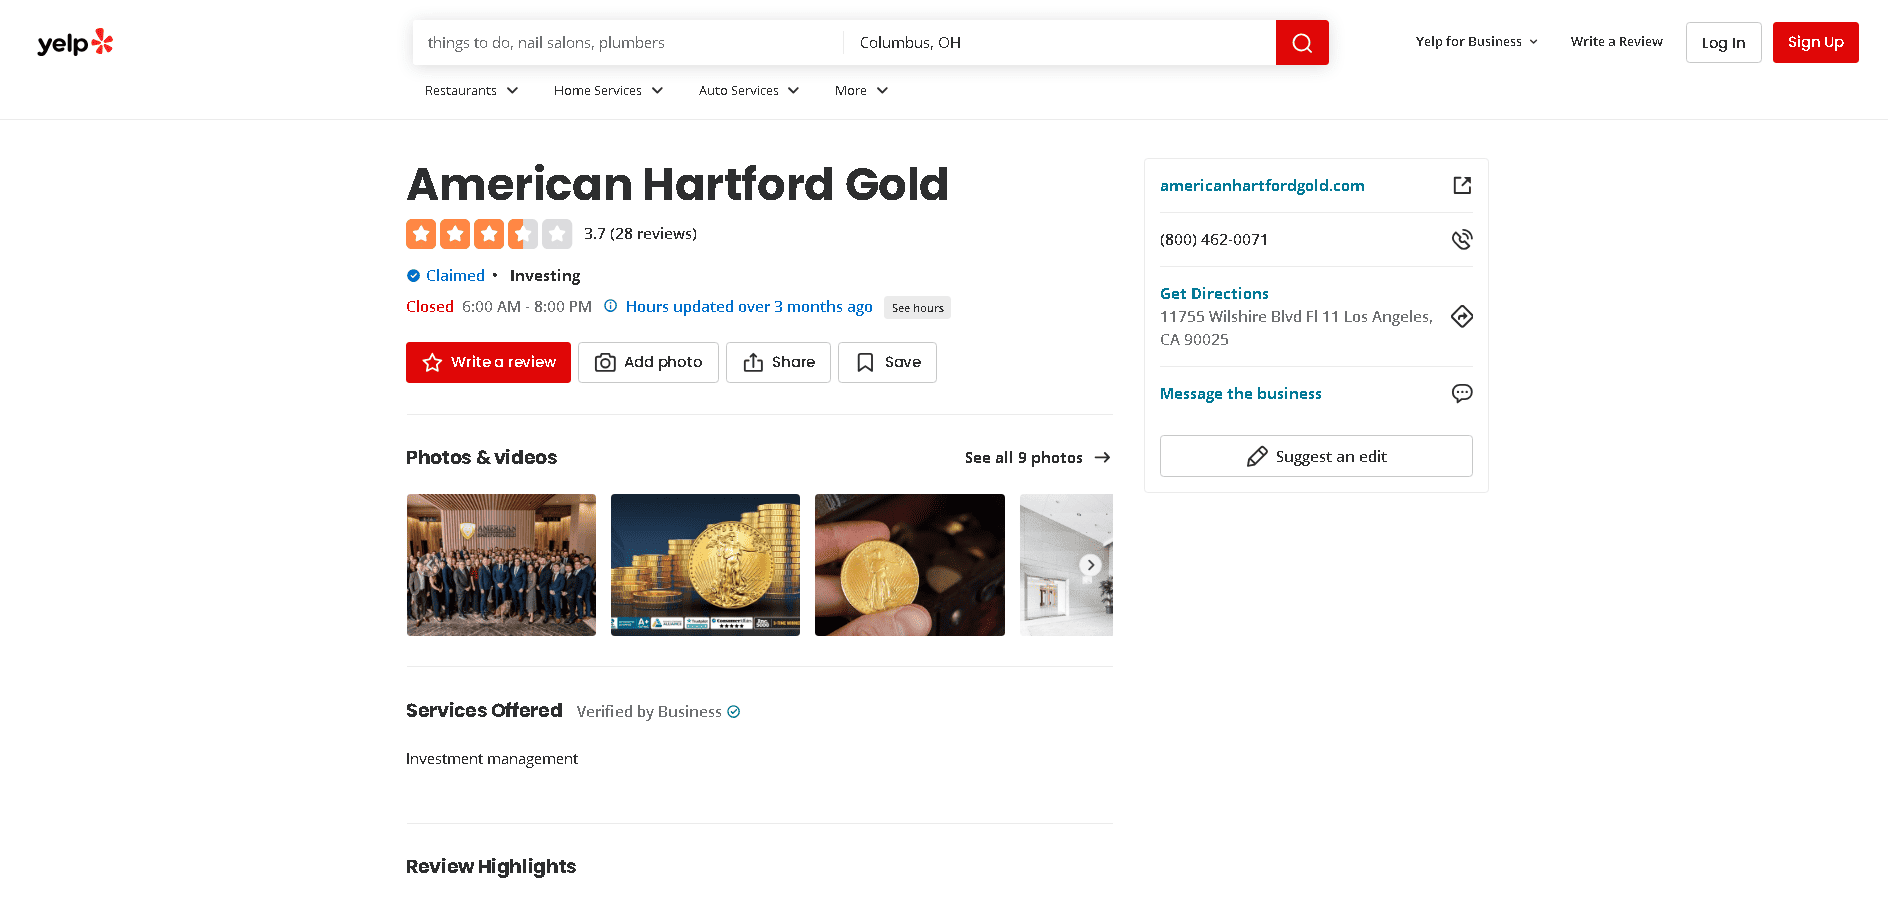 American Hartford Gold Yelp profile and customer reviews